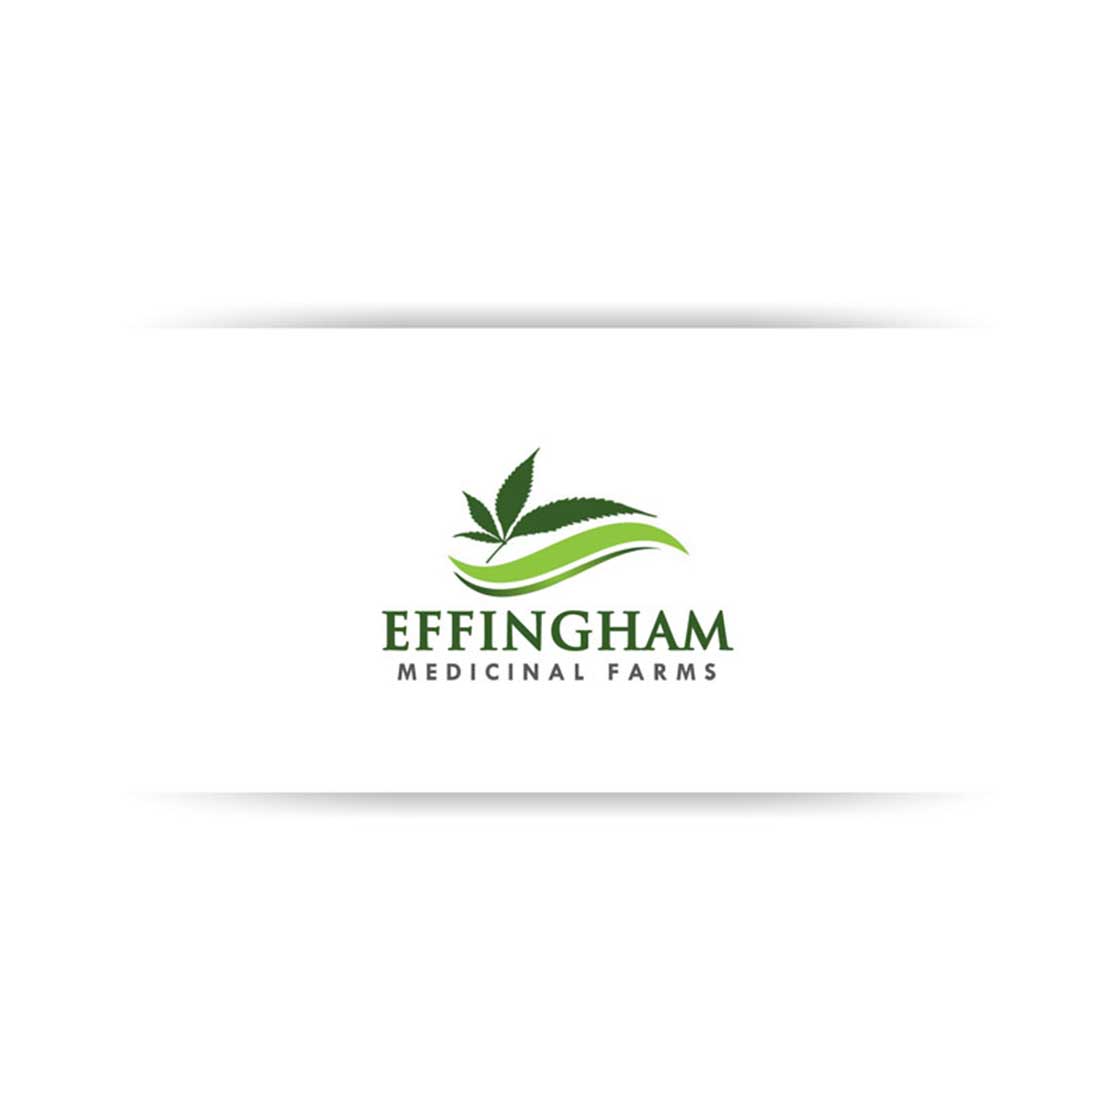 Hemp Logo - Cannabis Logo Design from Professional Logo Designers | crowdspring